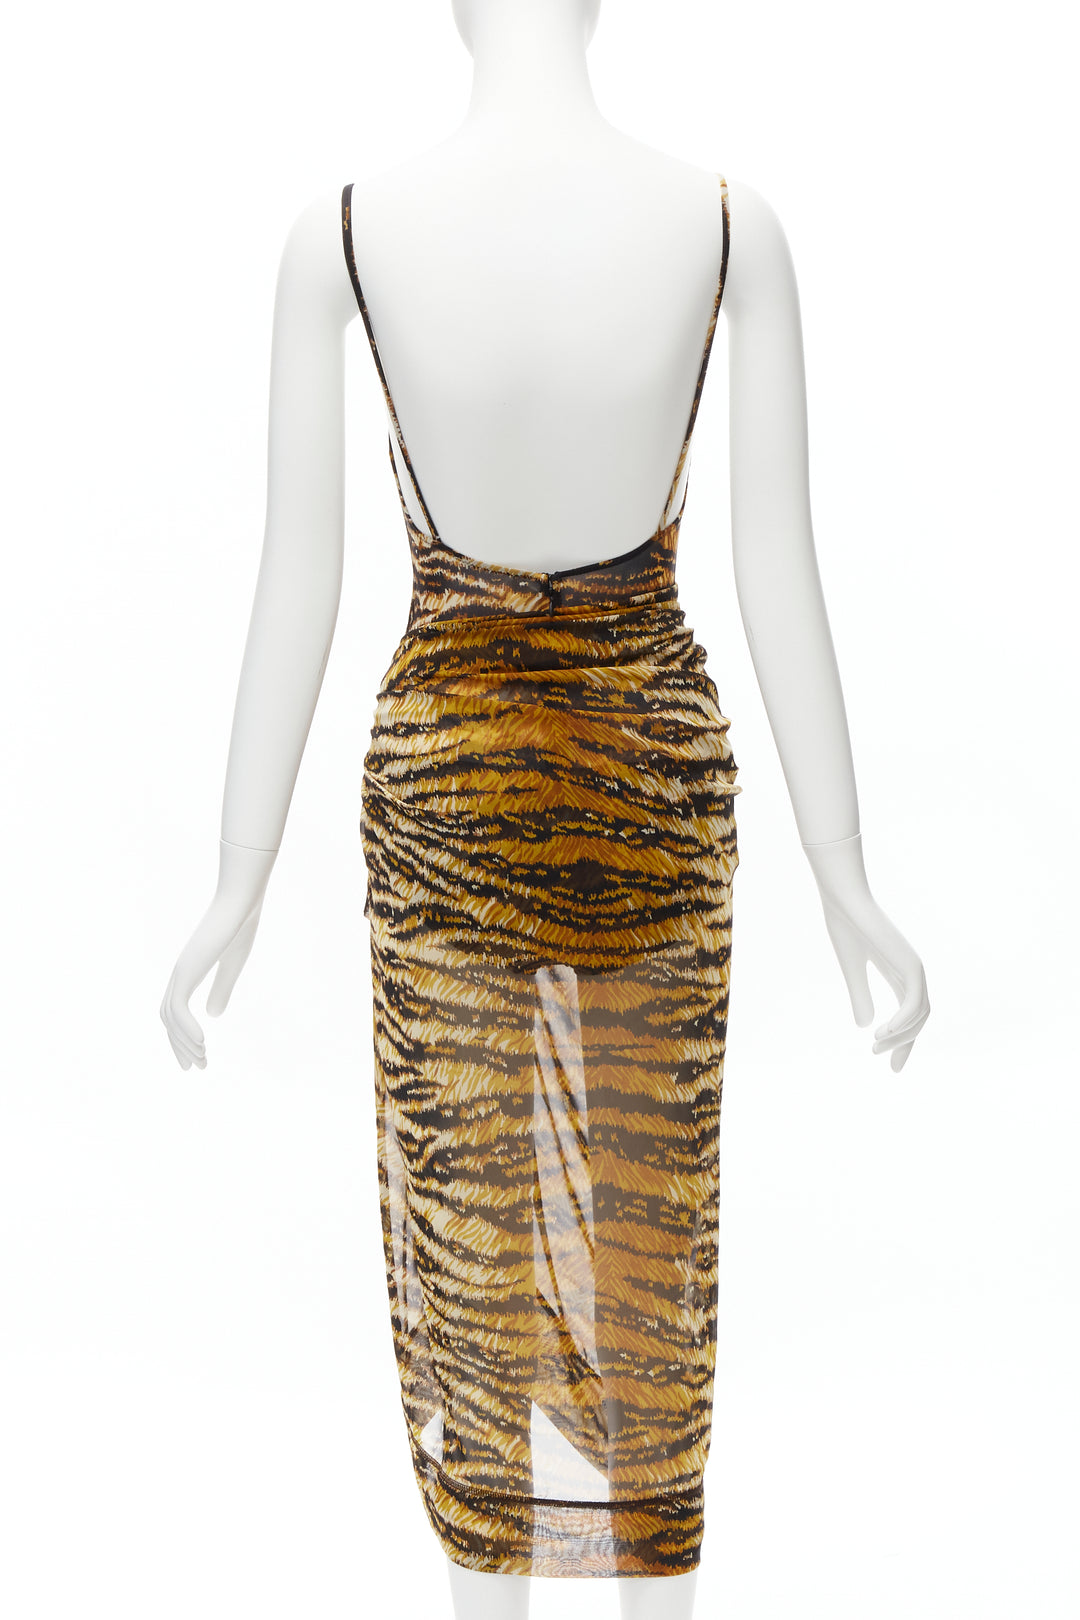 DOLCE GABBANA MARE Vintage brown tiger mesh bustier bodysuit wrap skirt scarf S